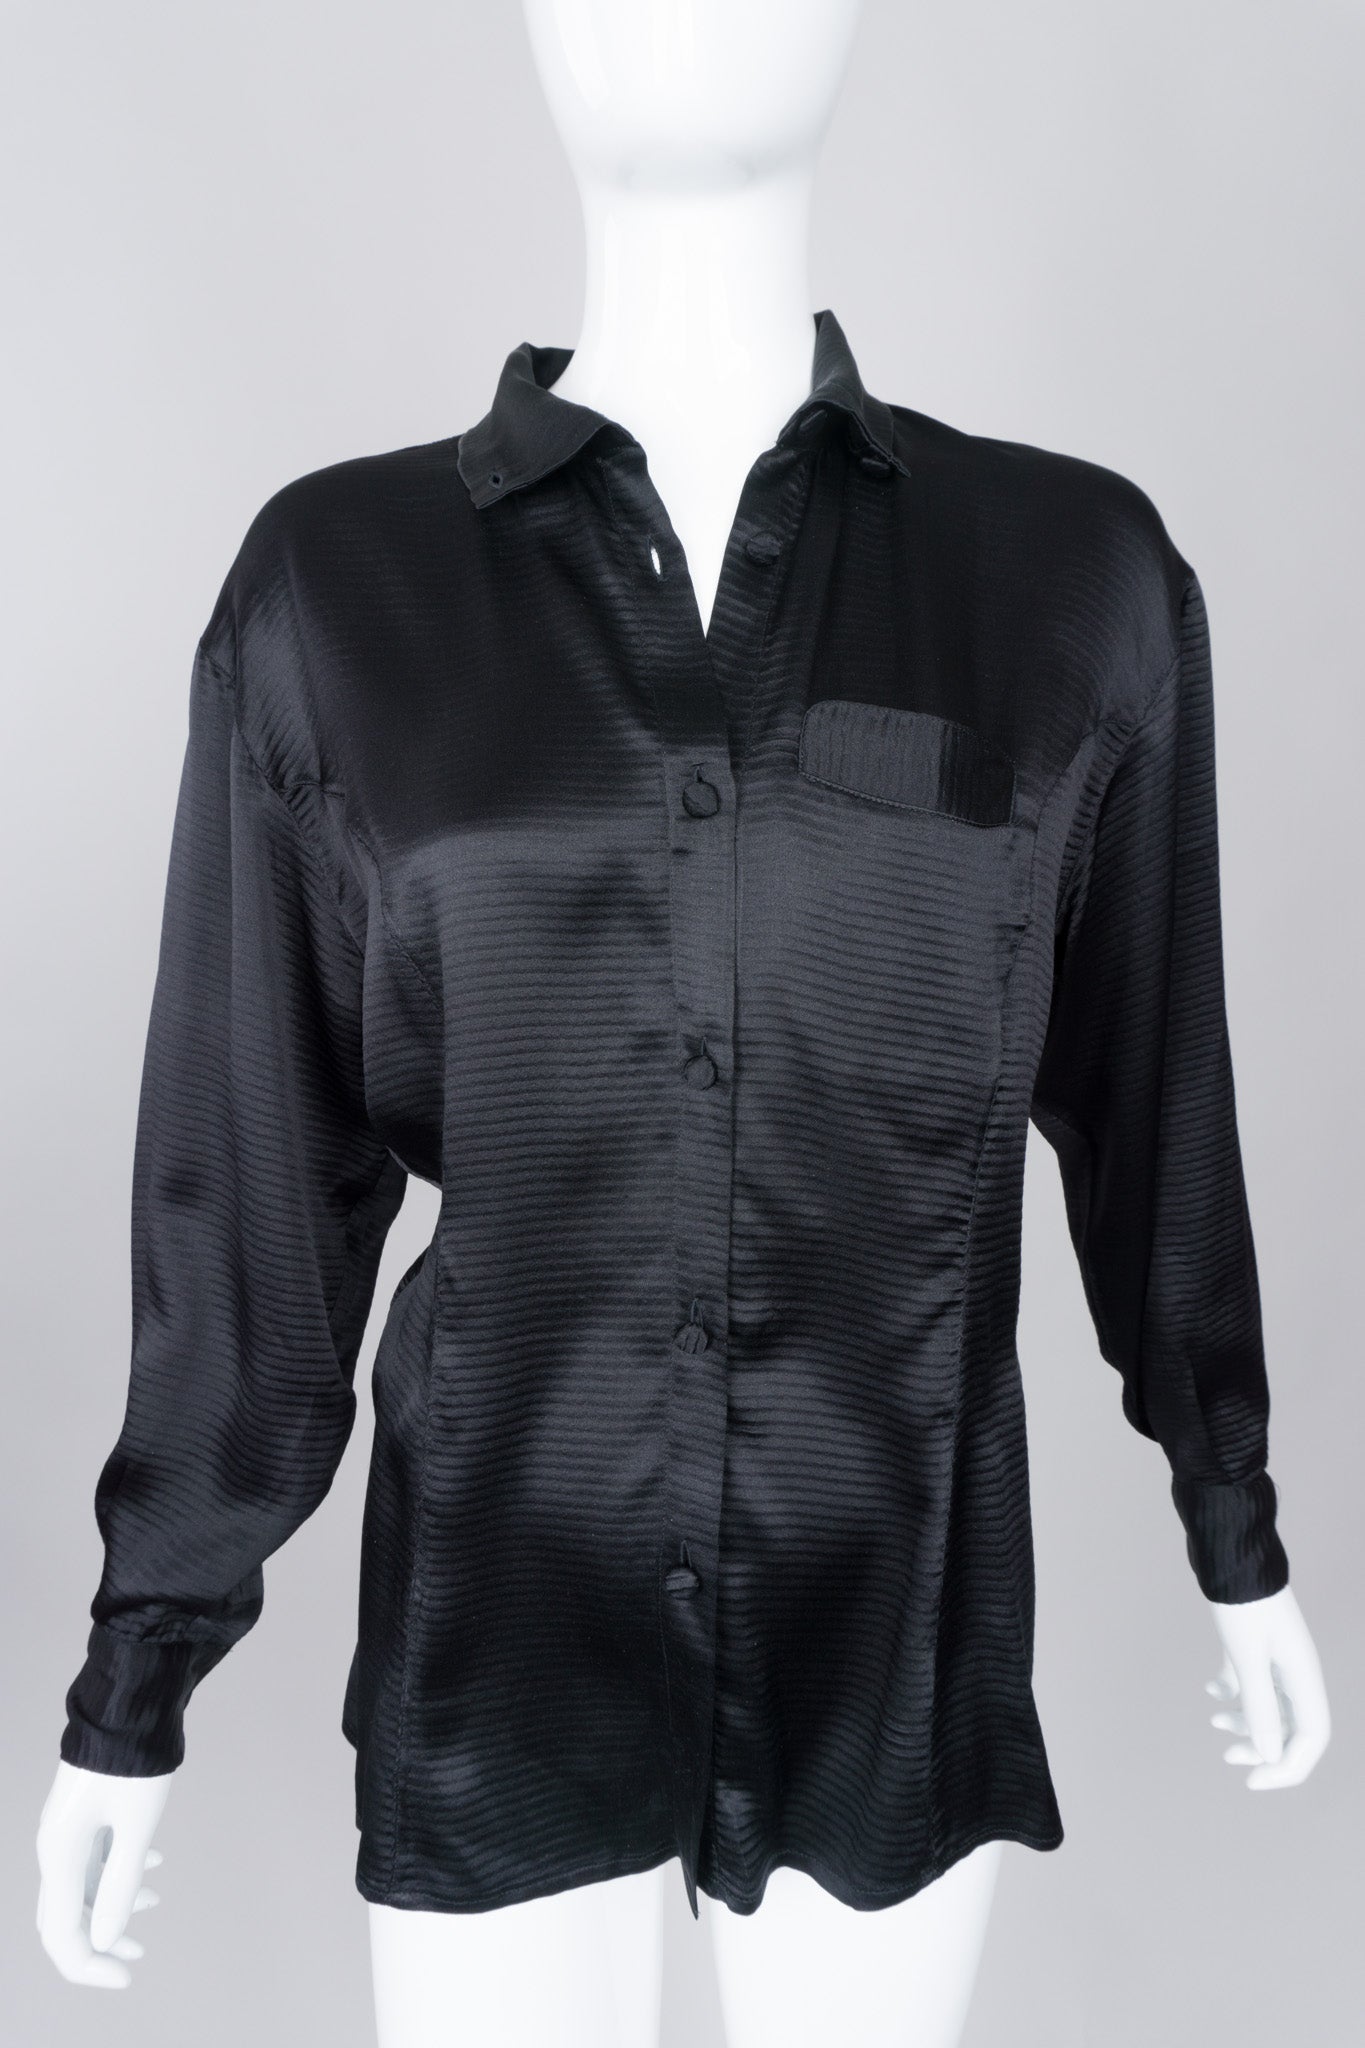 Umberto Ginocchiette Vintage Convertible Collar Silk Pajama Blouse